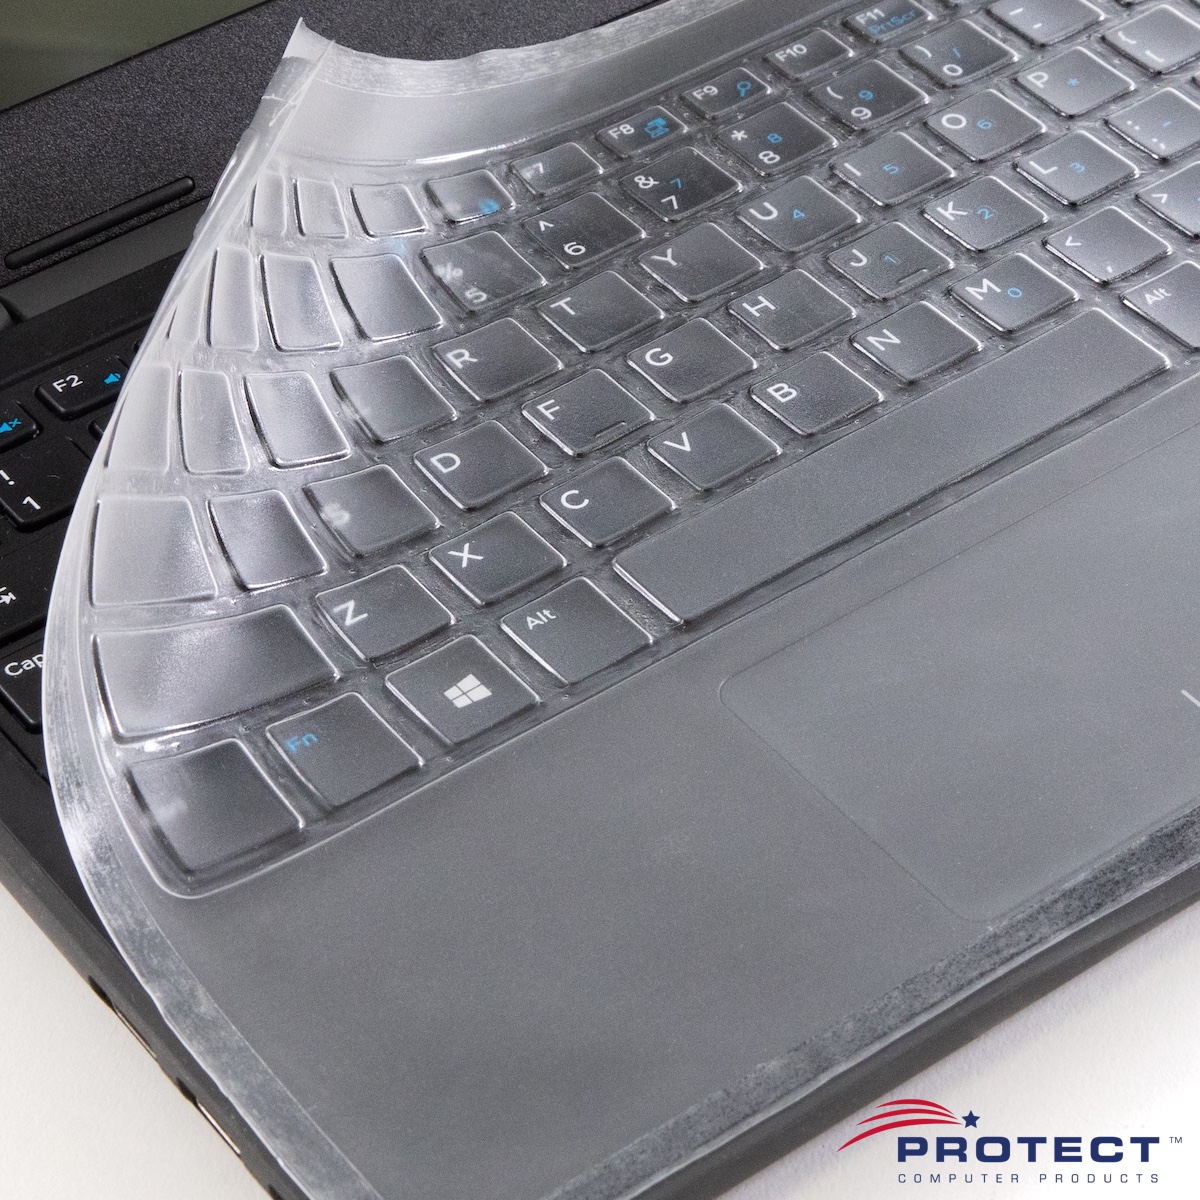 IBM | Lenovo T570 EURO Thinkpad  Laptop Protector